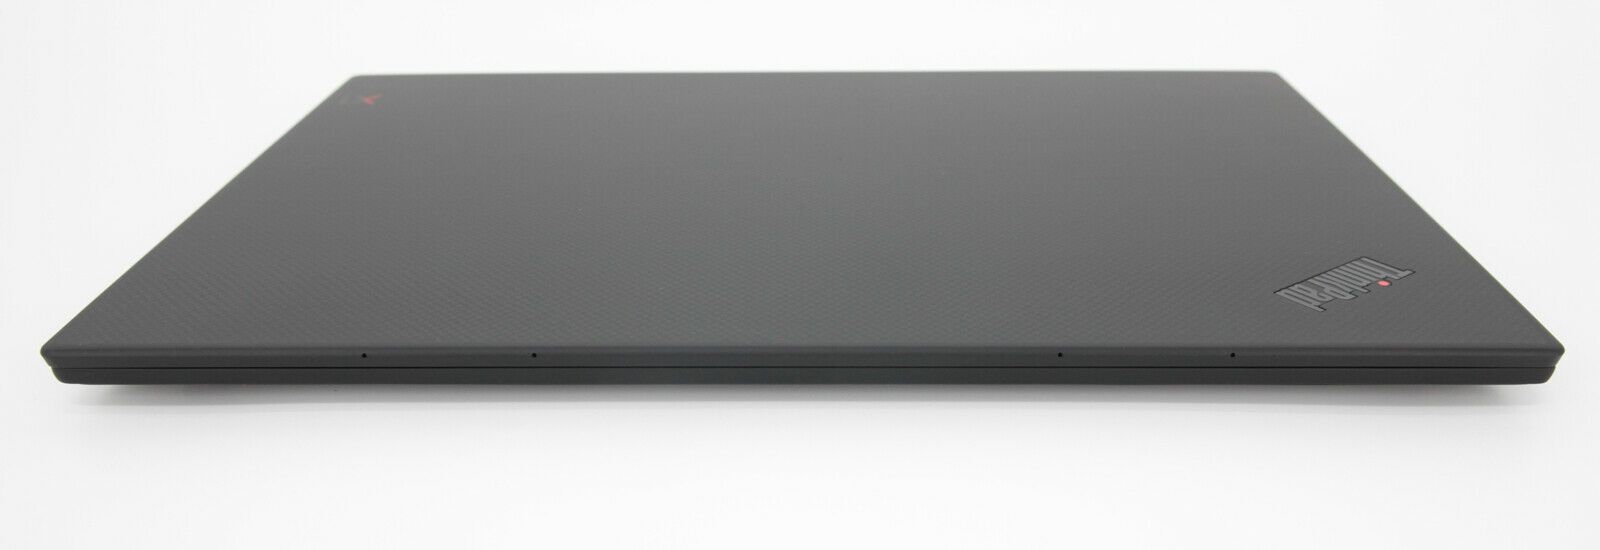 Lenovo ThinkPad X1 Carbon 7th Gen (2019): 4K, 8th Gen i7, 512GB, 16GB, LTE, VAT - CruiseTech